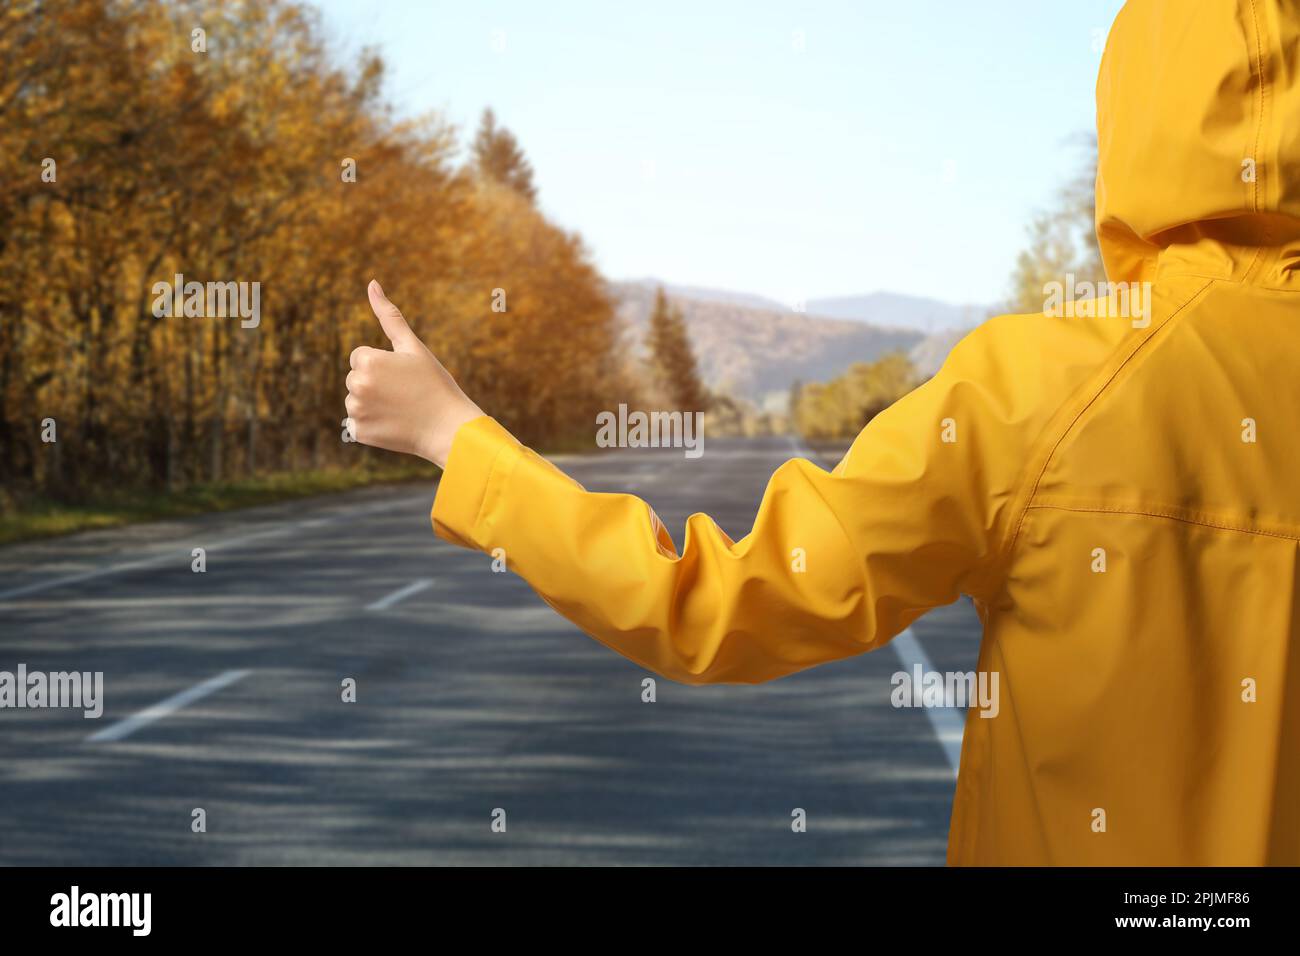 Woman catching car on road, closeup. Hitchhiking trip Stock Photo